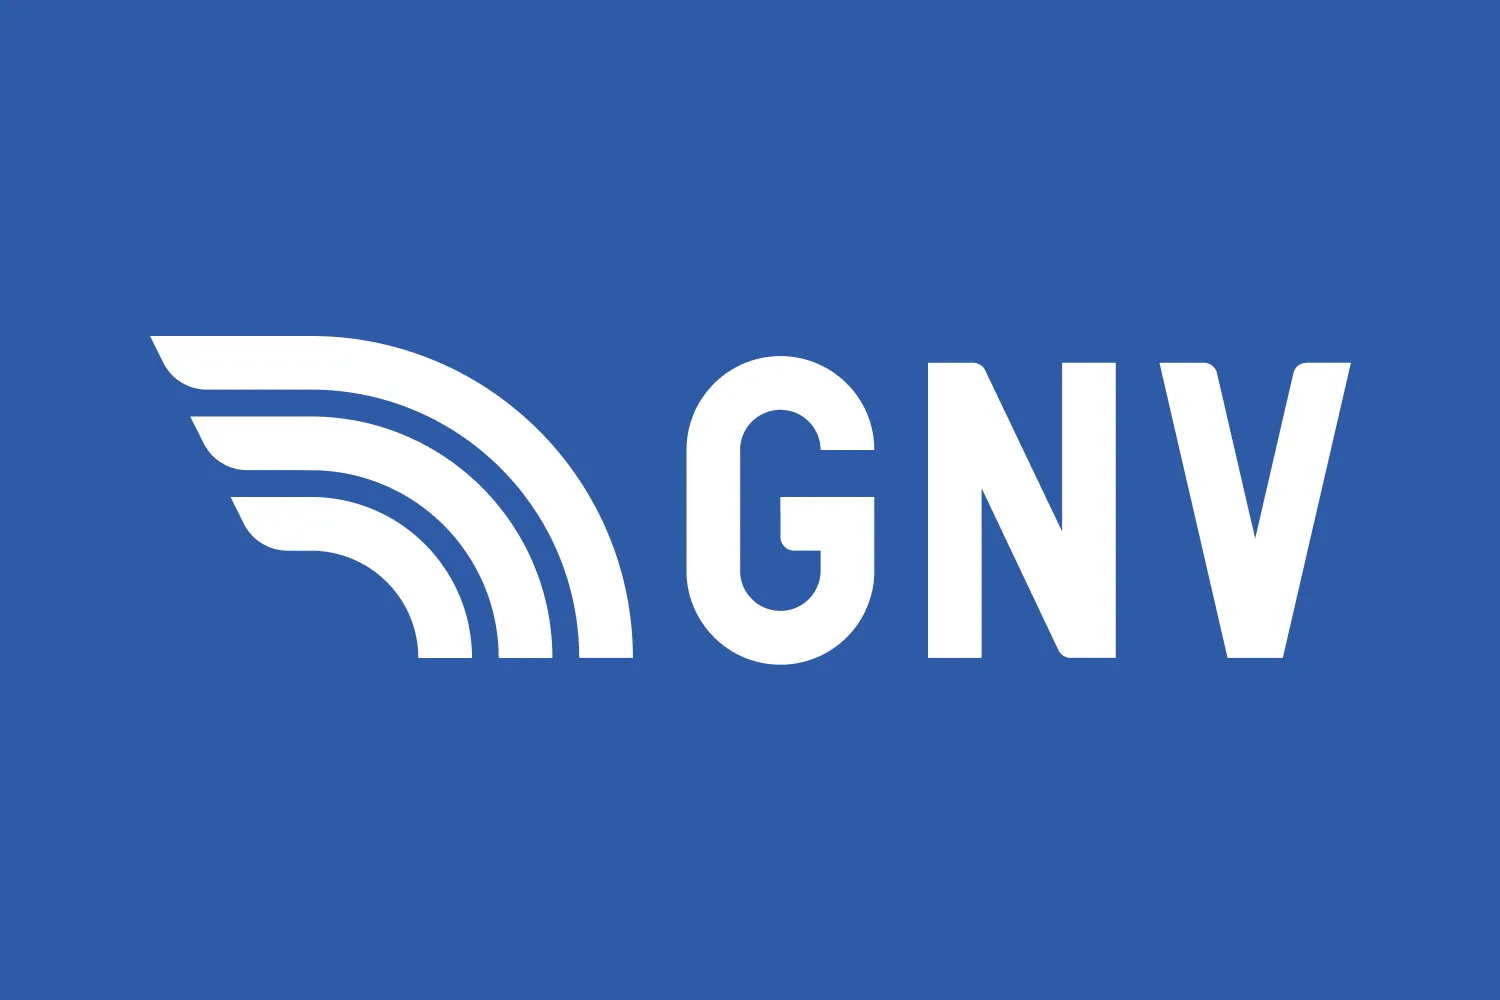 The Grandi Navi Veloci logo.